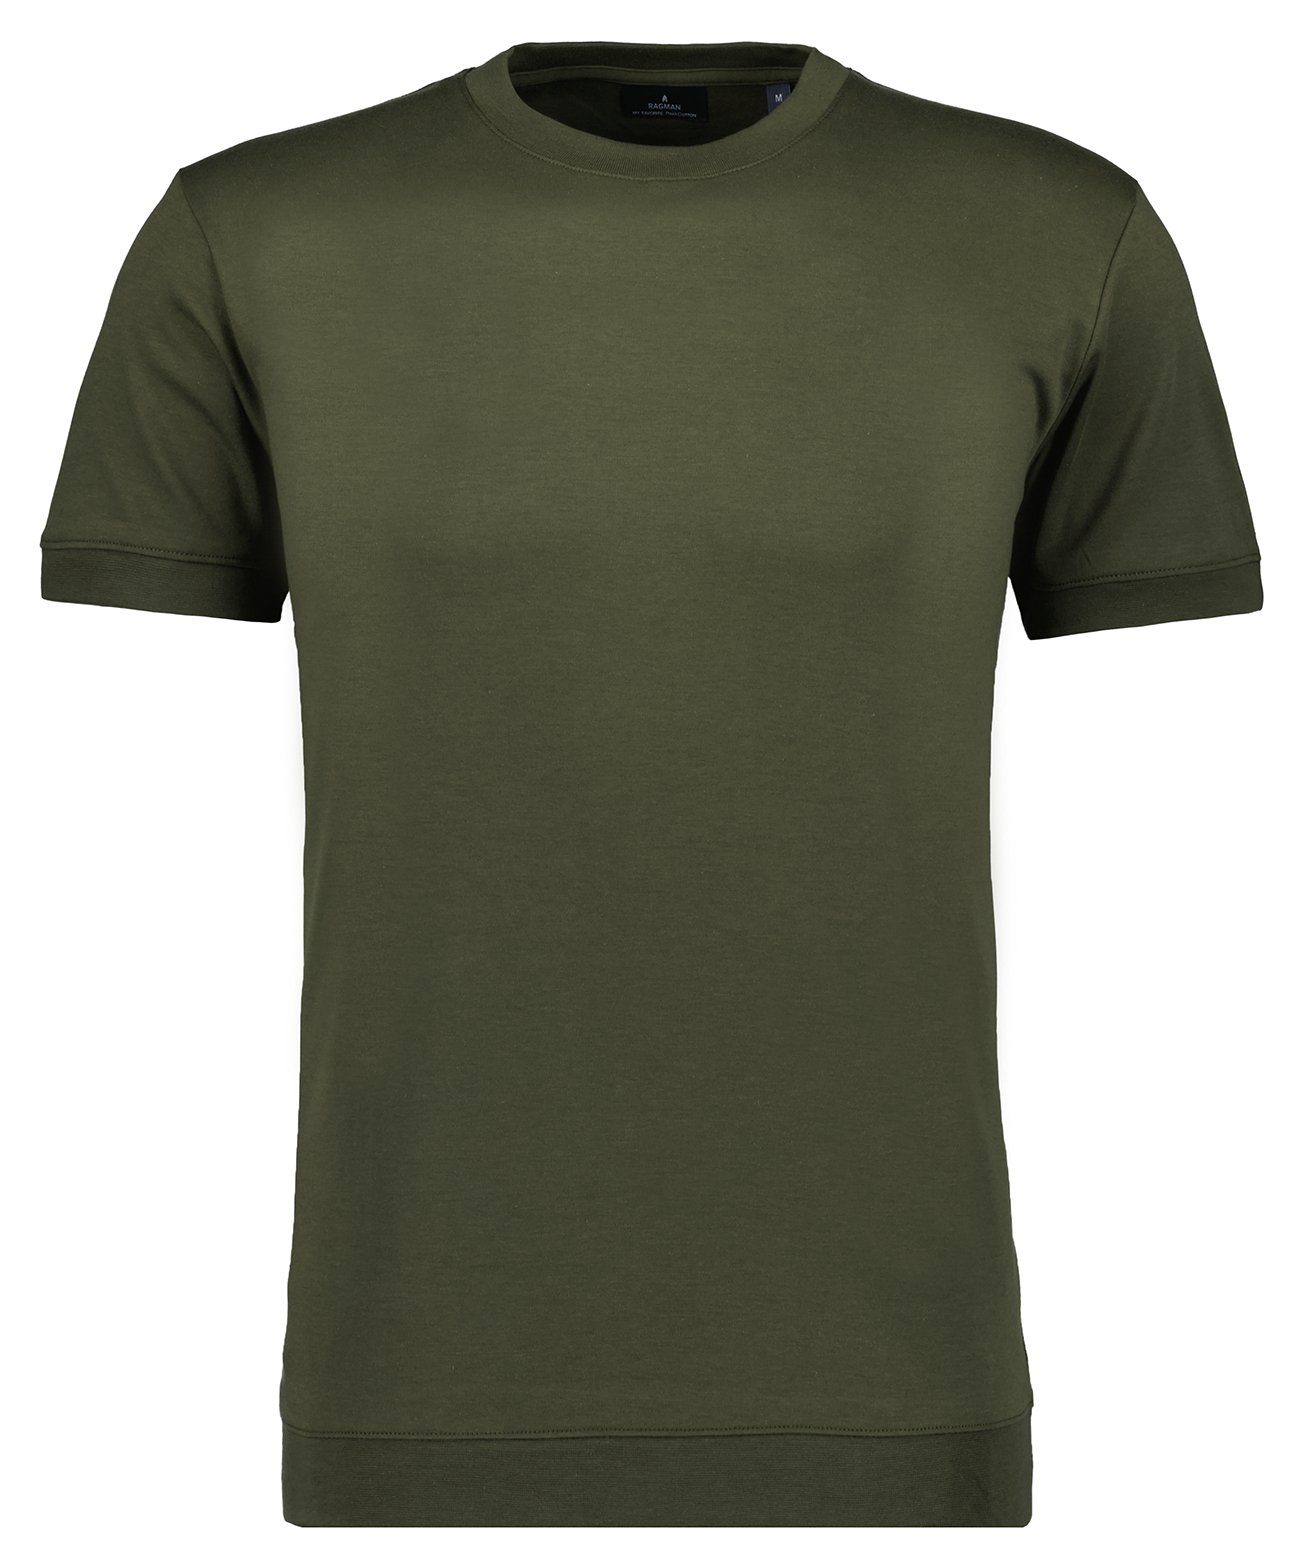 RAGMAN T-Shirt Dunkelgrün-393